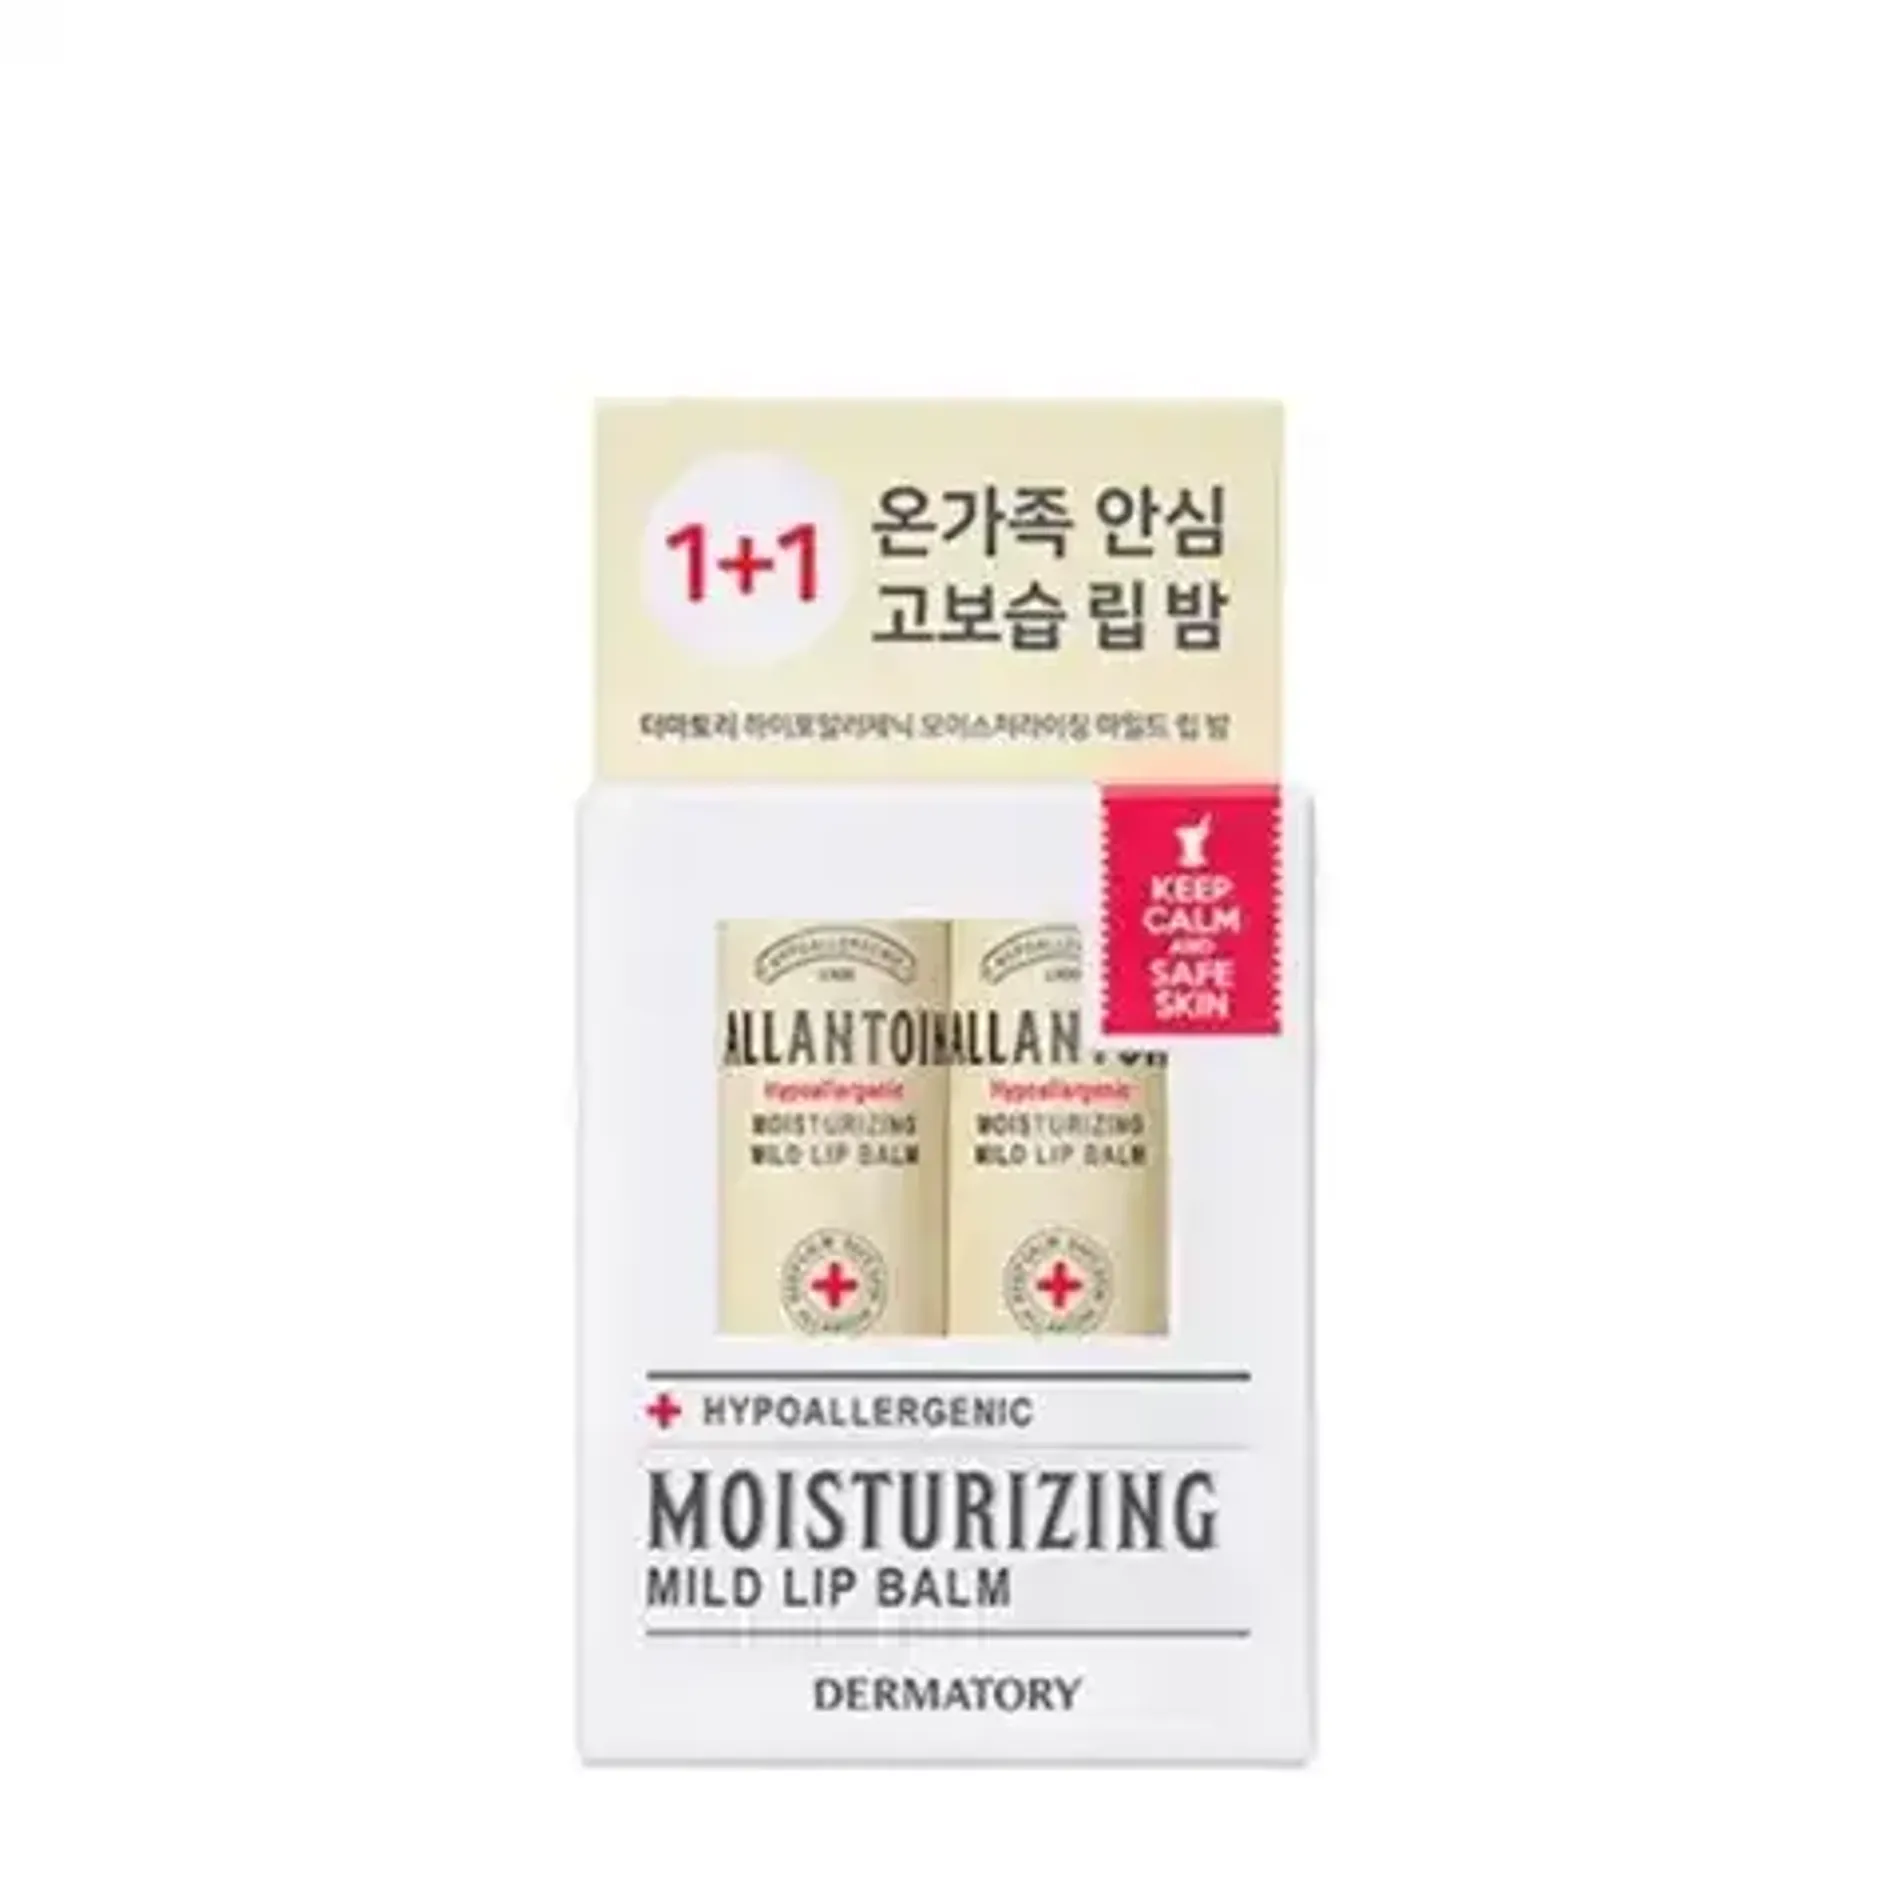 gift-son-duong-moi-dermatory-hypoallergenic-moisturizing-mild-lip-balm-duo-3-3g-3-3g-1